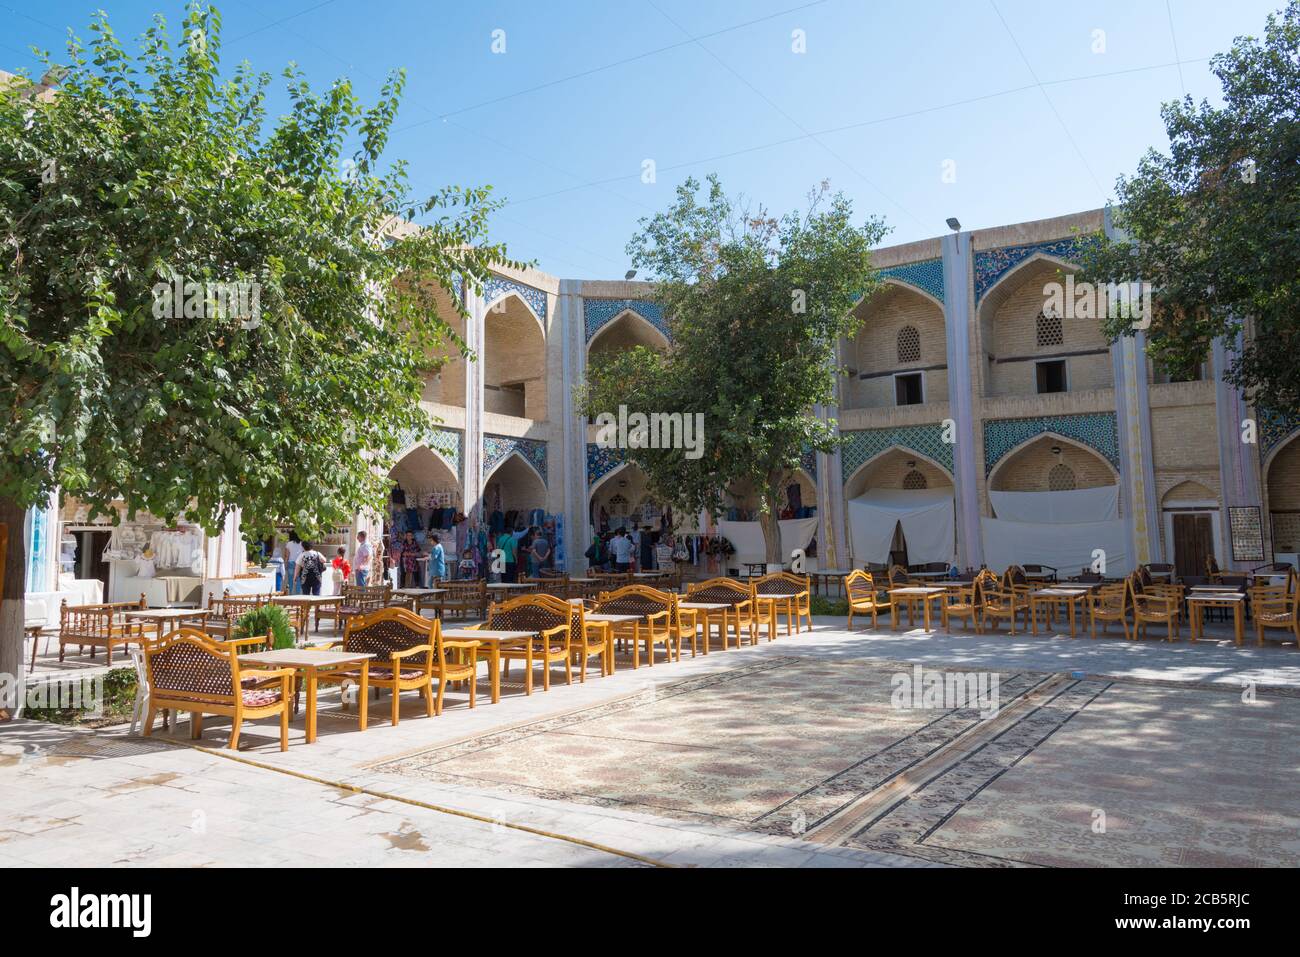 Bukhara, Uzbekistan - Nadir Divanbegi Madrasa a Bukhara, Uzbekistan. Fa parte del centro storico di Bukhara, patrimonio dell'umanità. Foto Stock